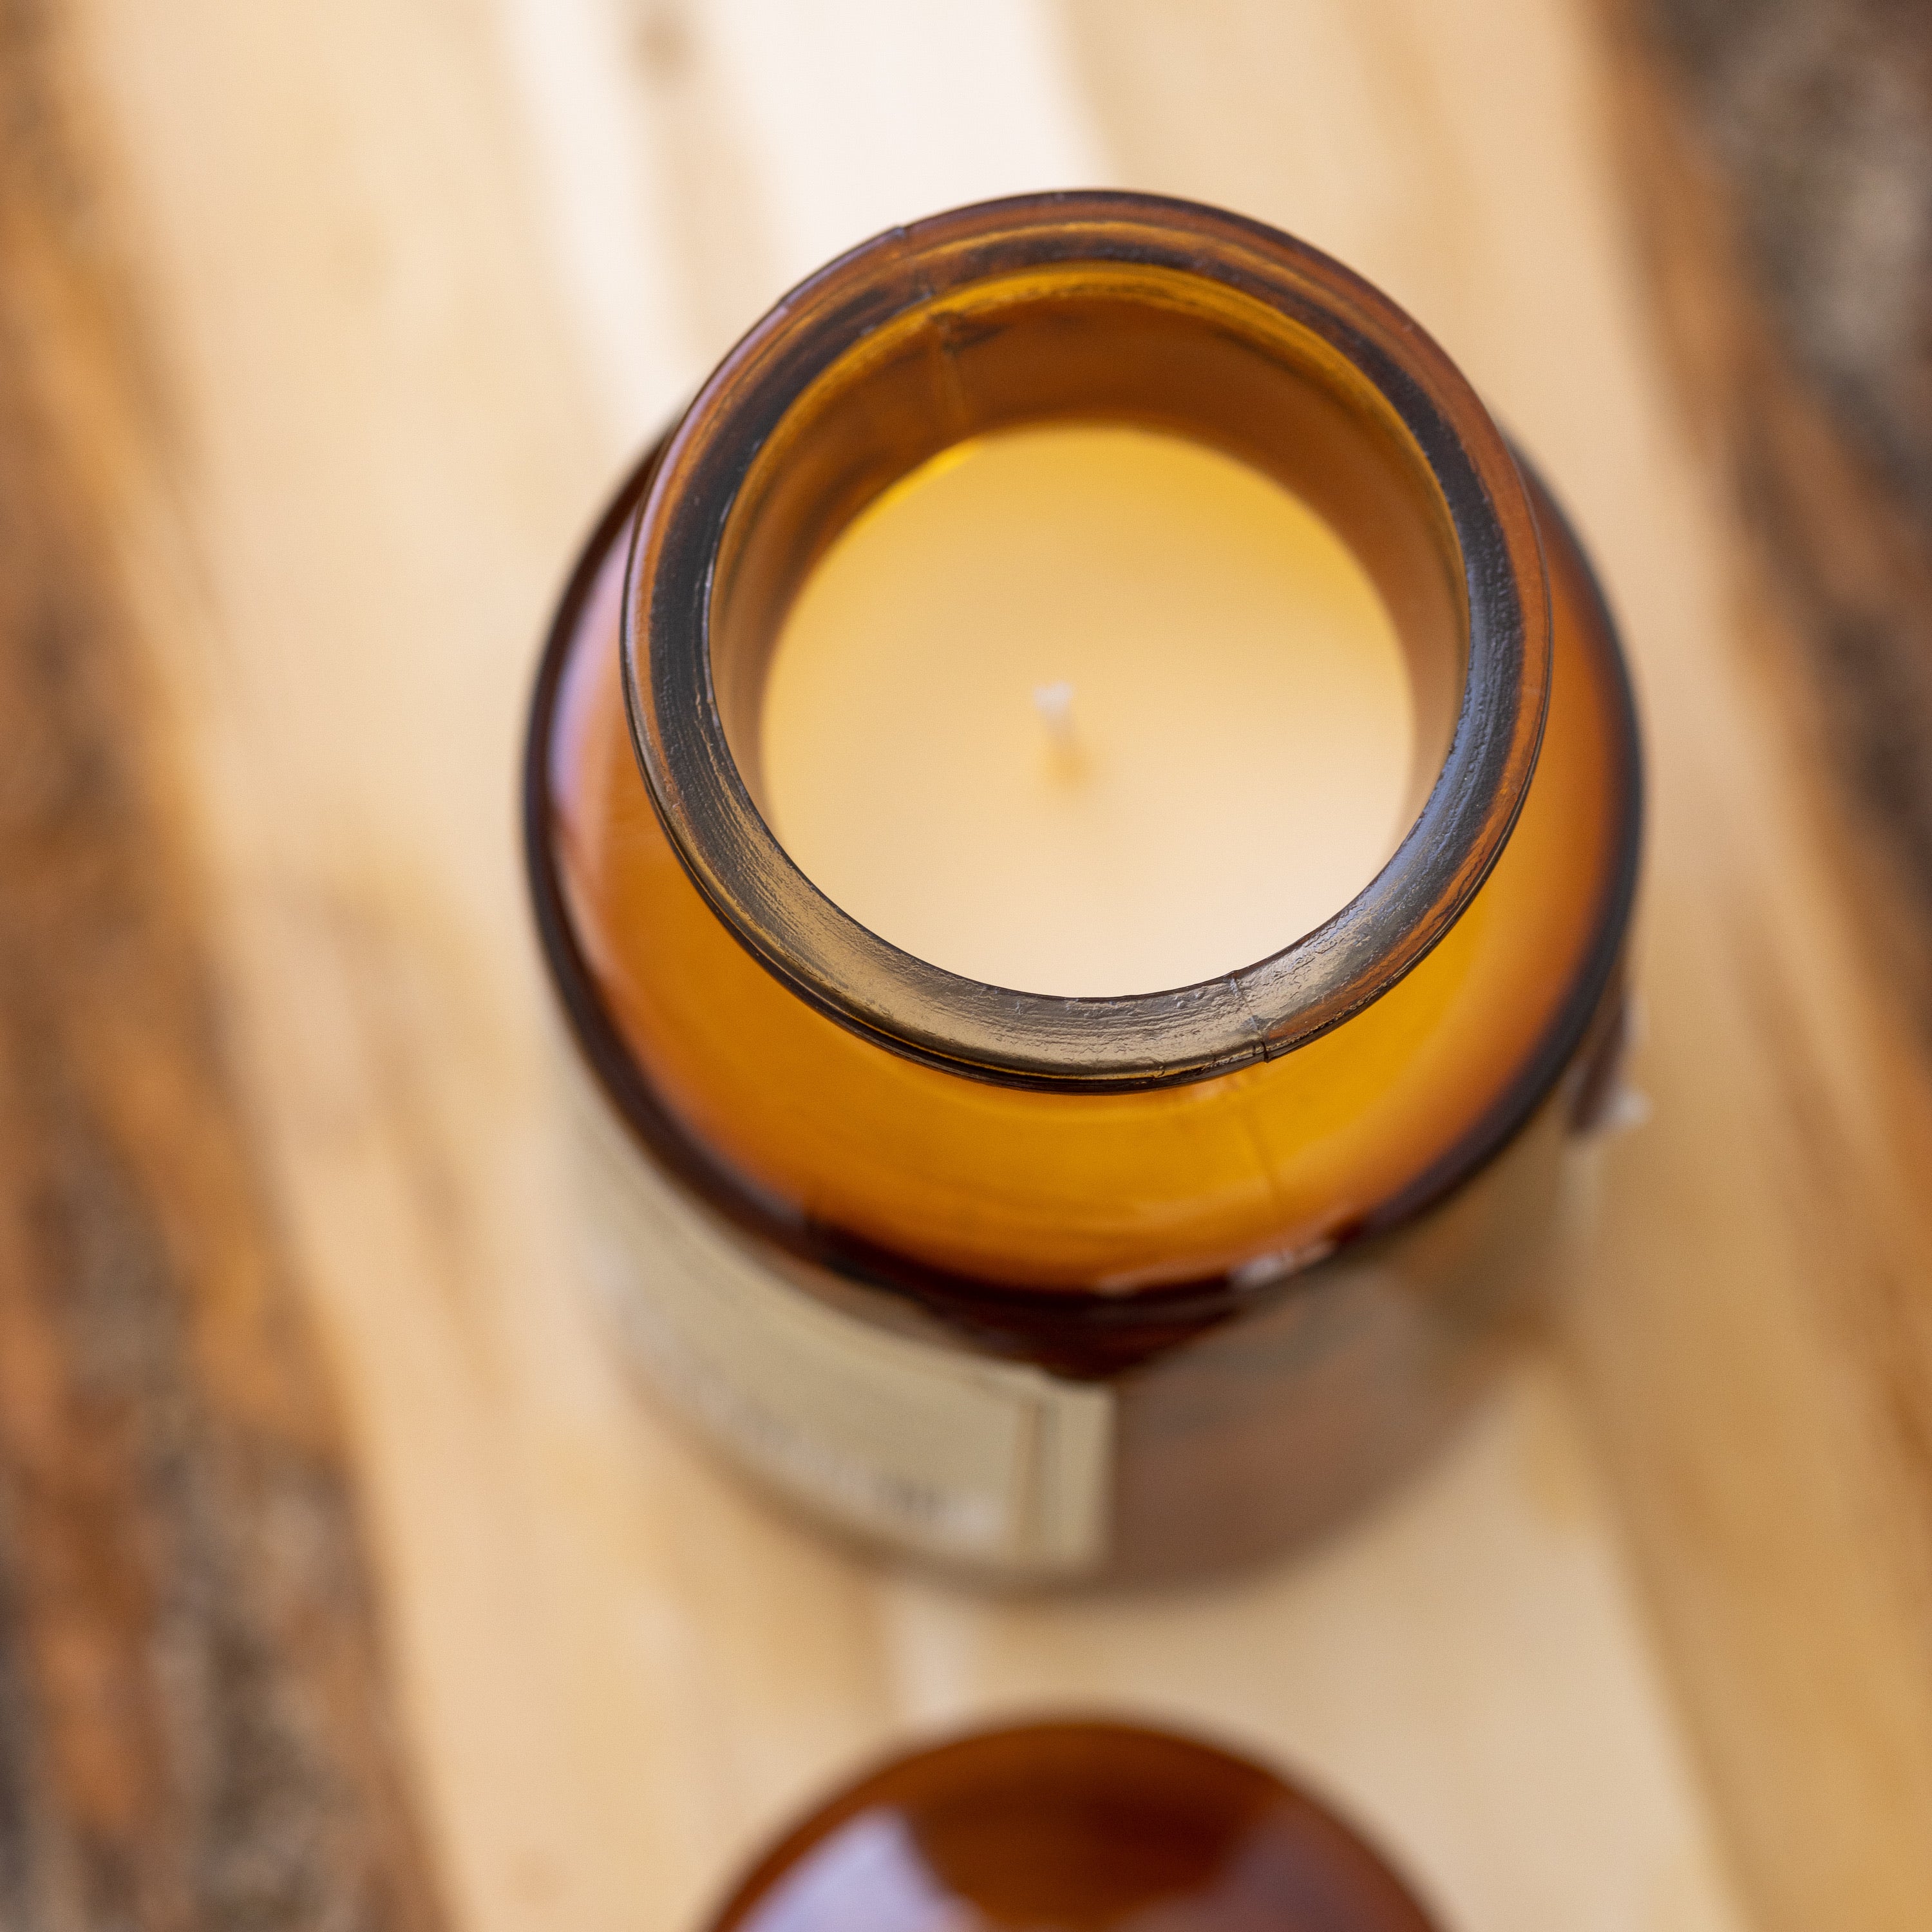 Apothecary Glass Jar Candle (226g) - Tobacco & Patchouli illatgyertya